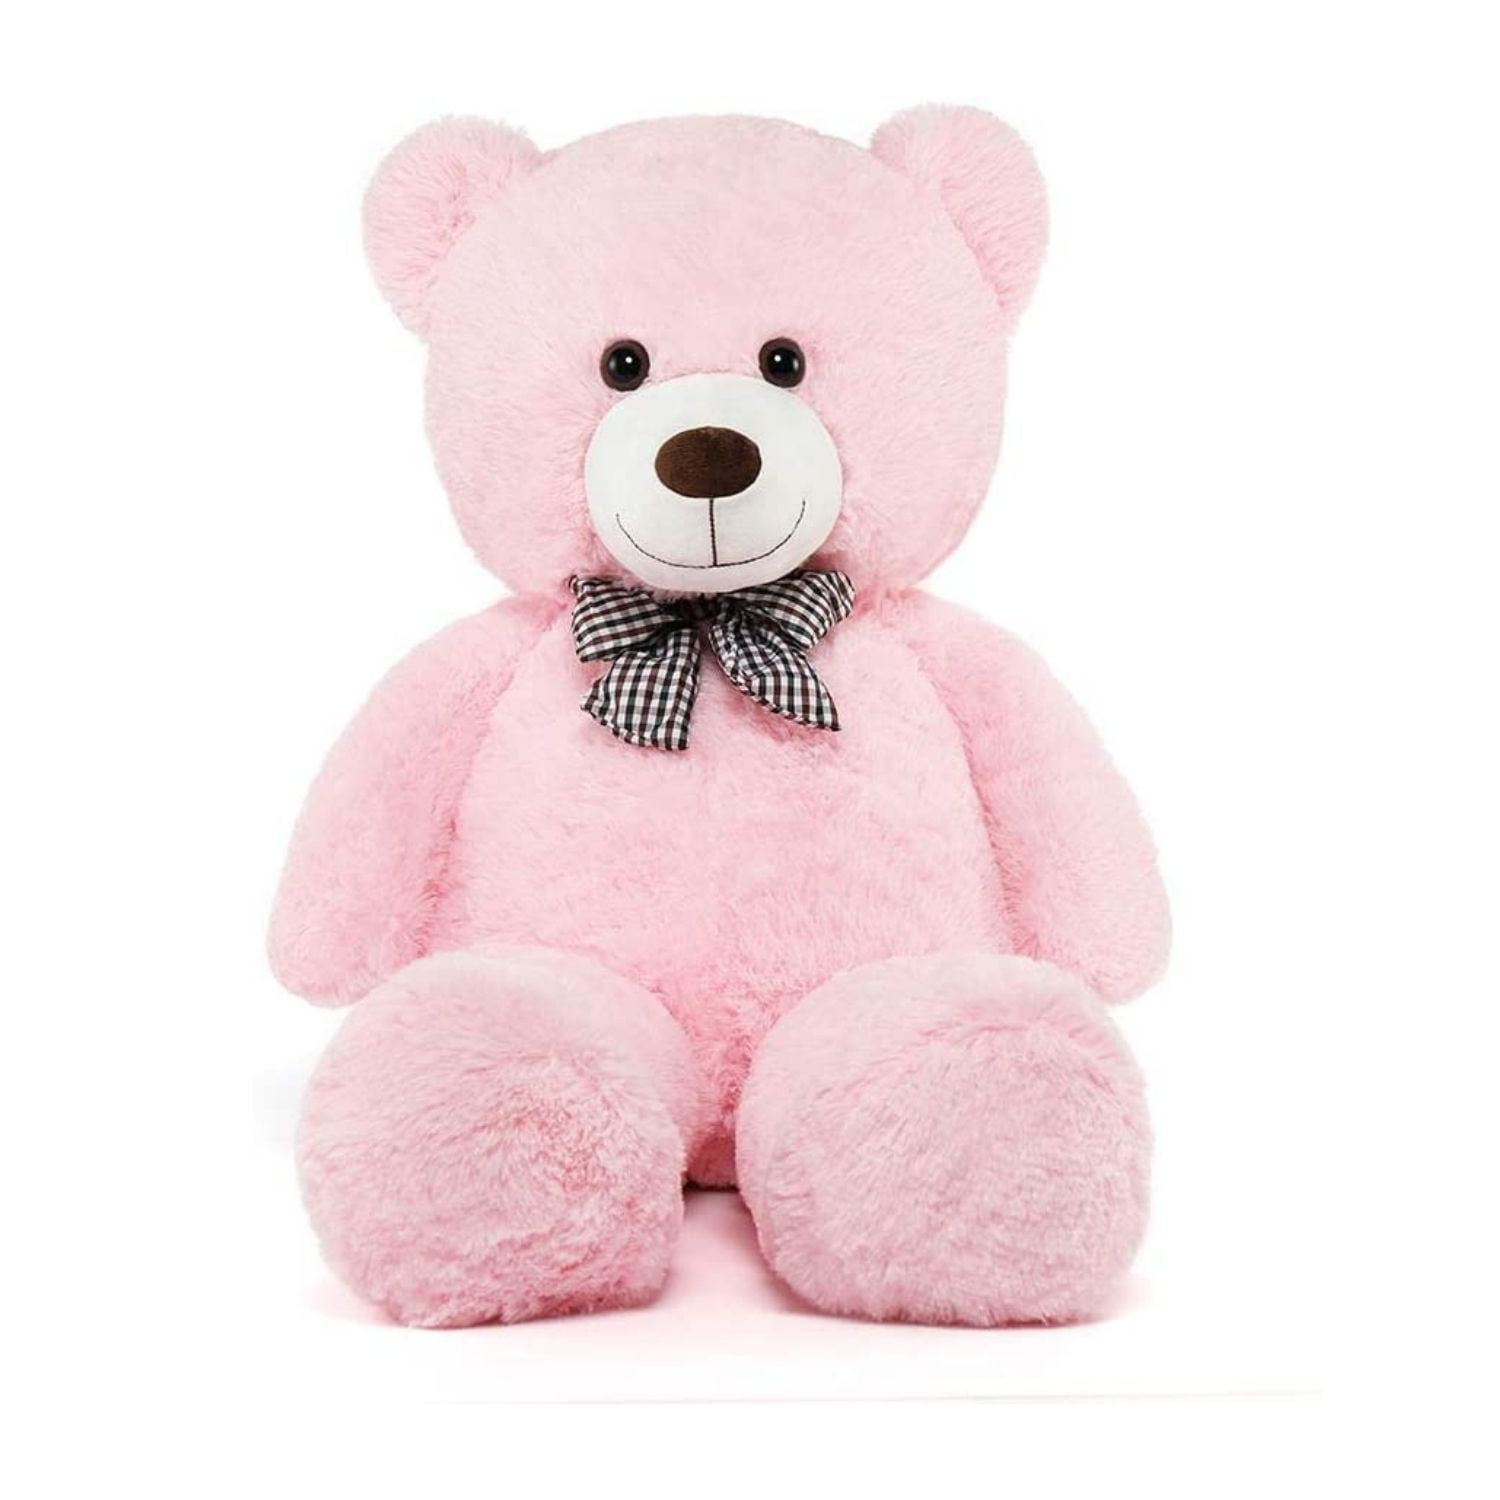 39" Stuffed Giant 100CM Big Pink Plush Teddy Bear Huge Soft 100% Cotton Doll Toy